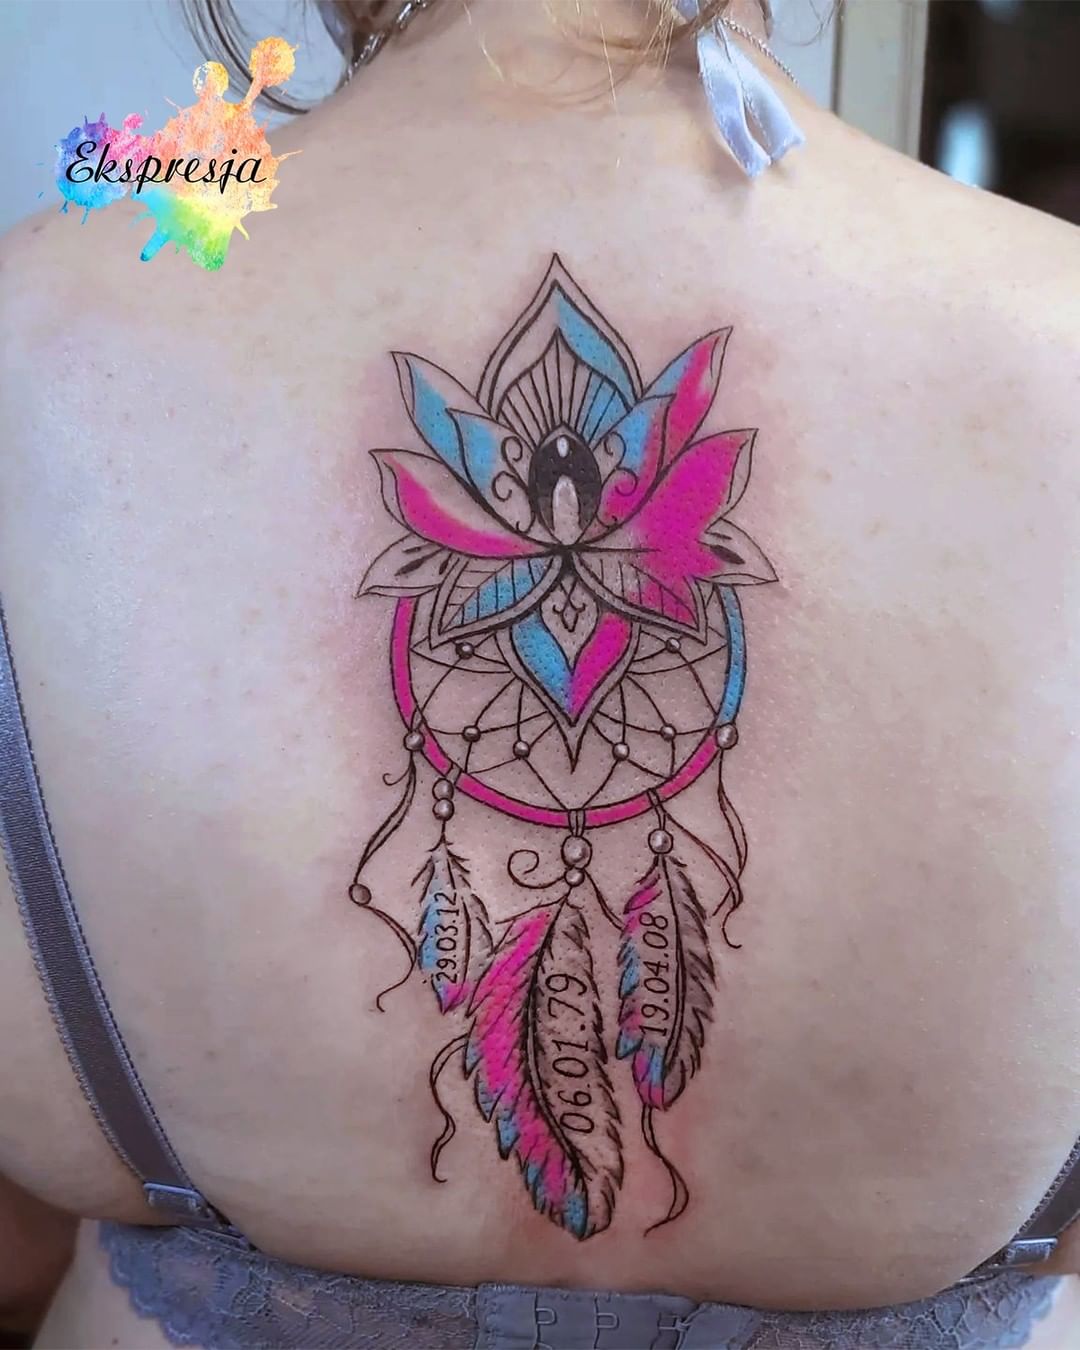 Tatuaje de espalda de atrapasueños